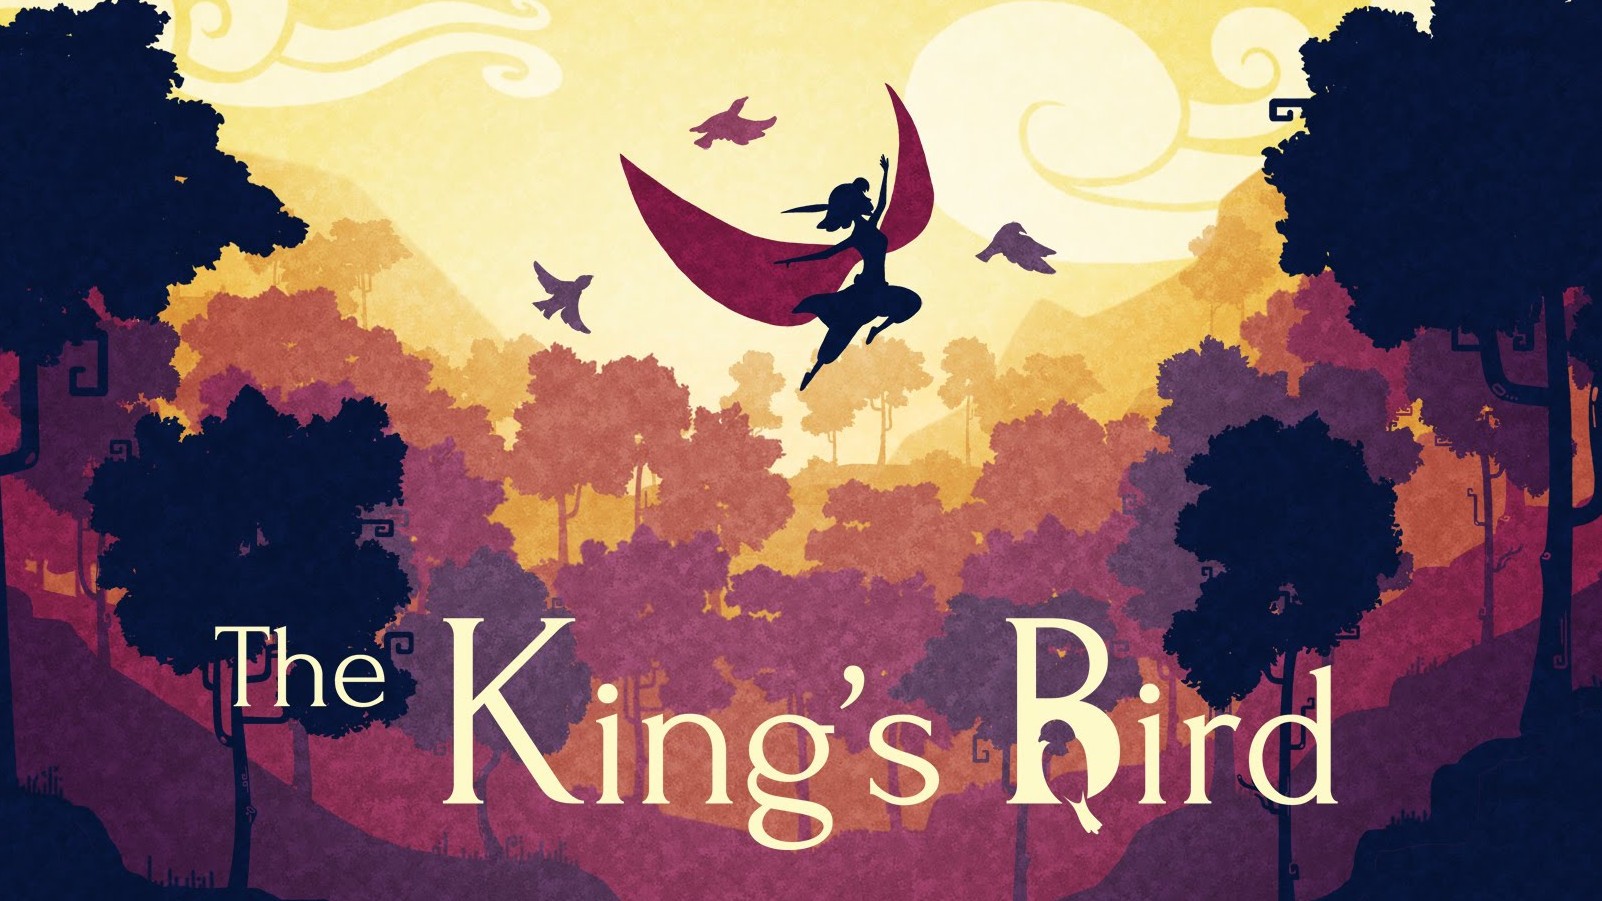 The King's Bird Steam CD Key